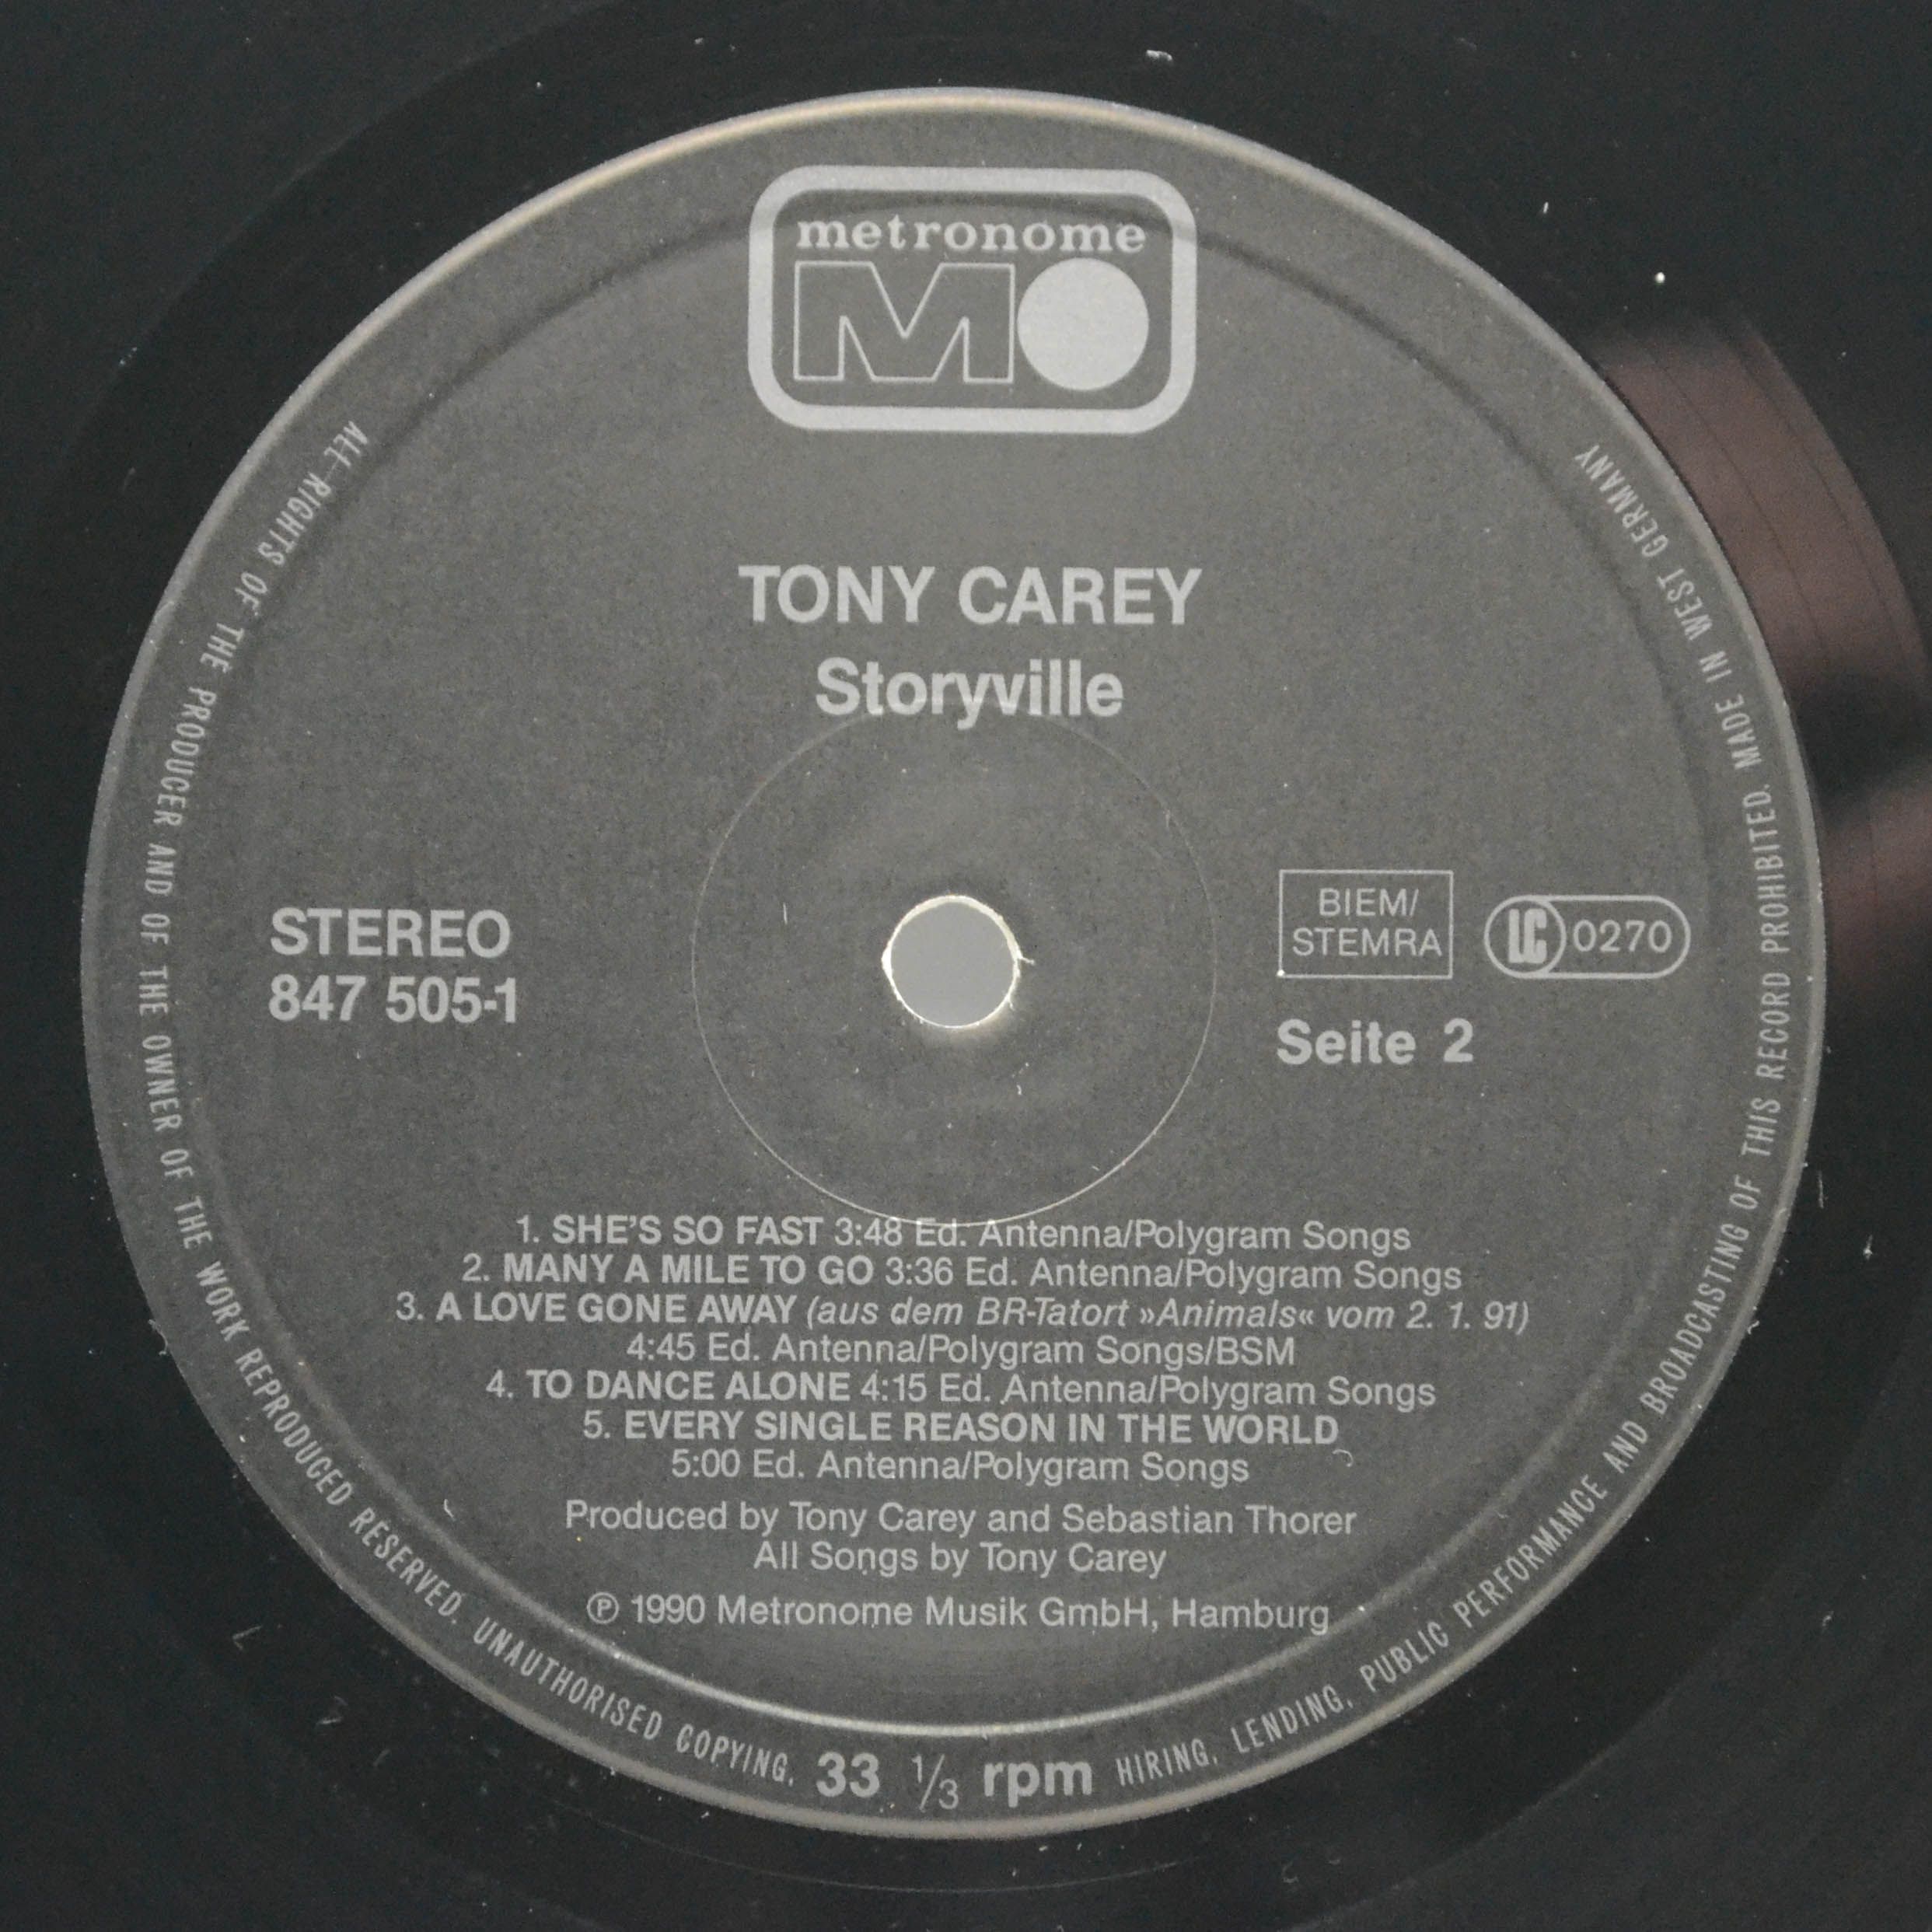 Tony Carey — Storyville, 1990